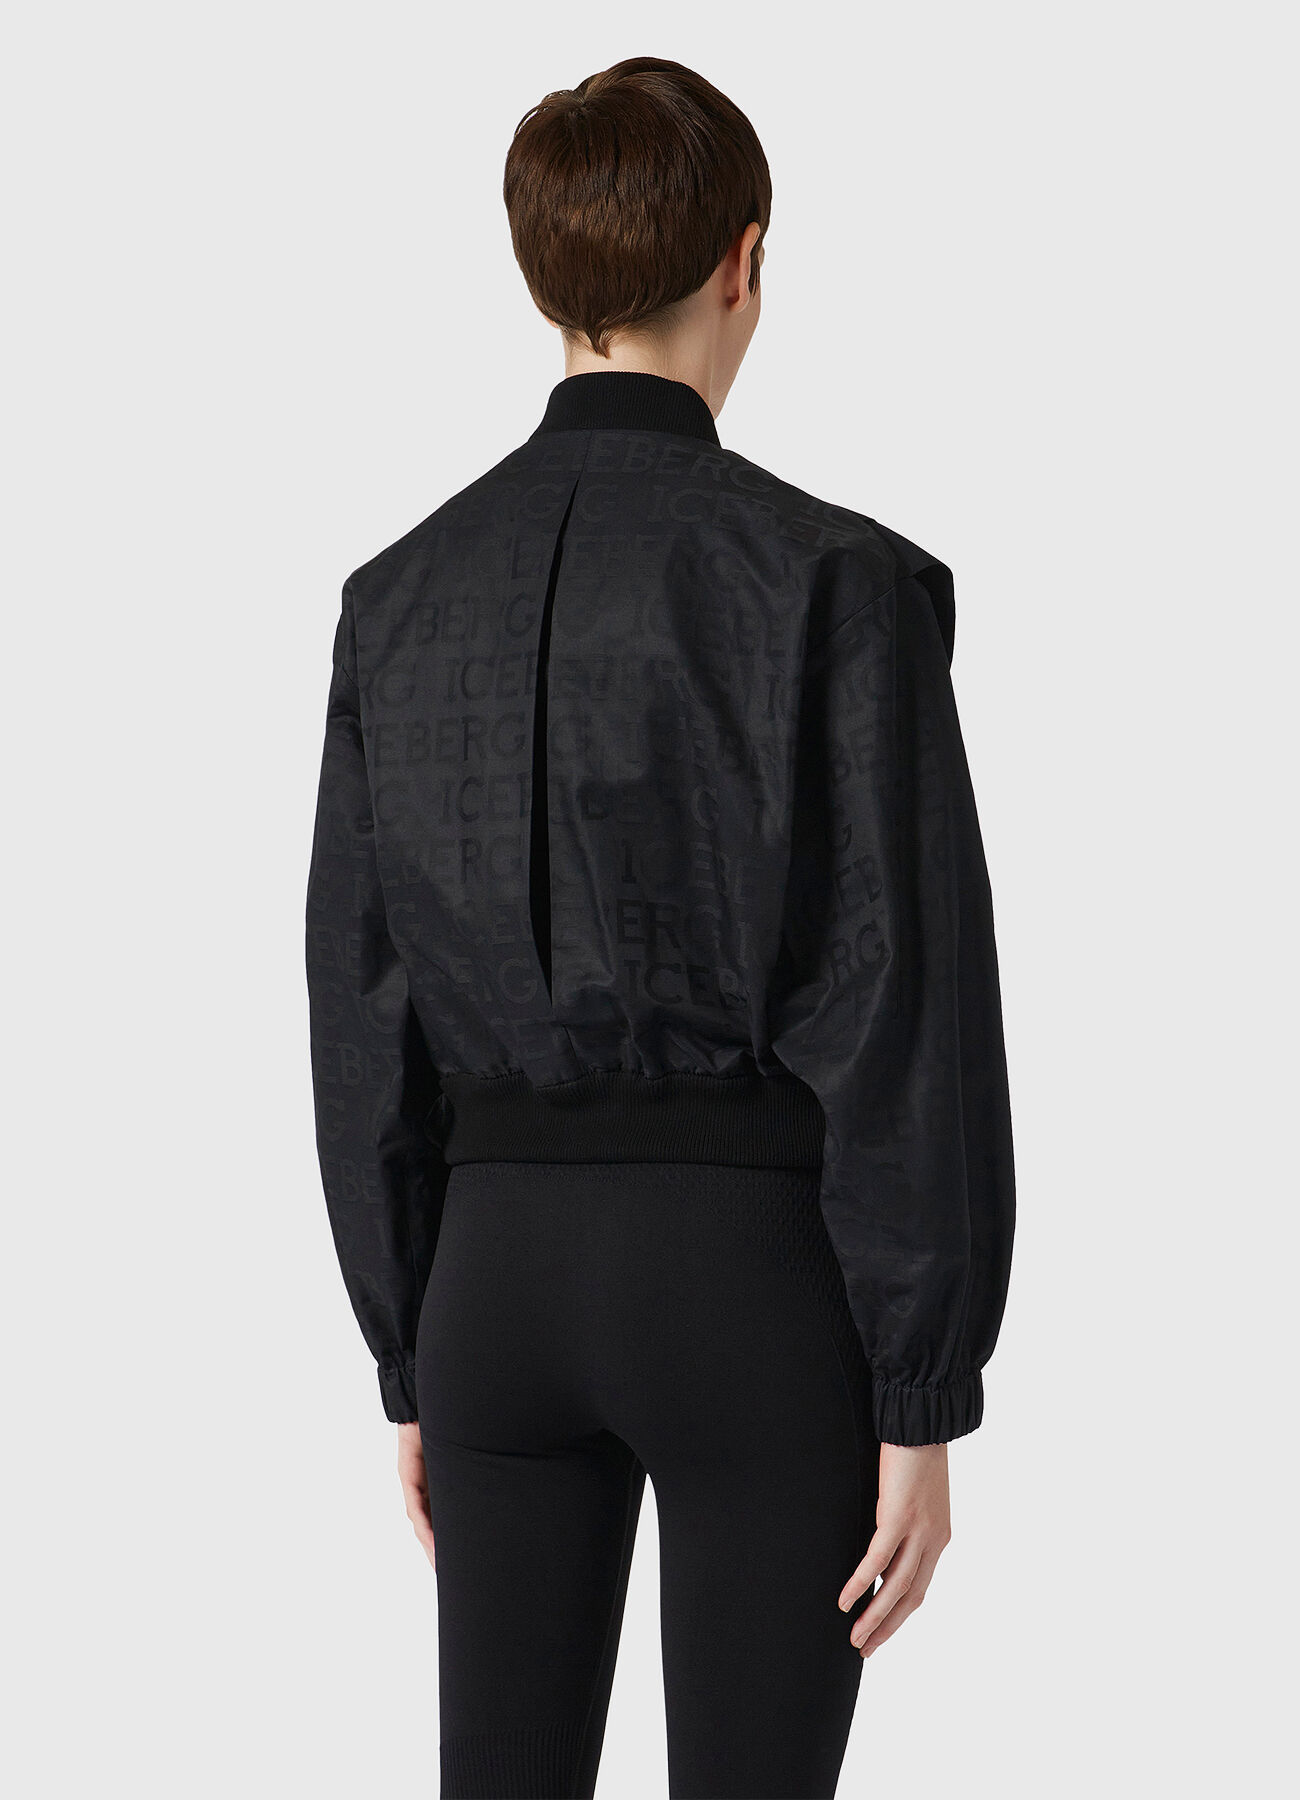 Black jacket with logo accent brand ICEBERG — Globalbrandsstore.com/en